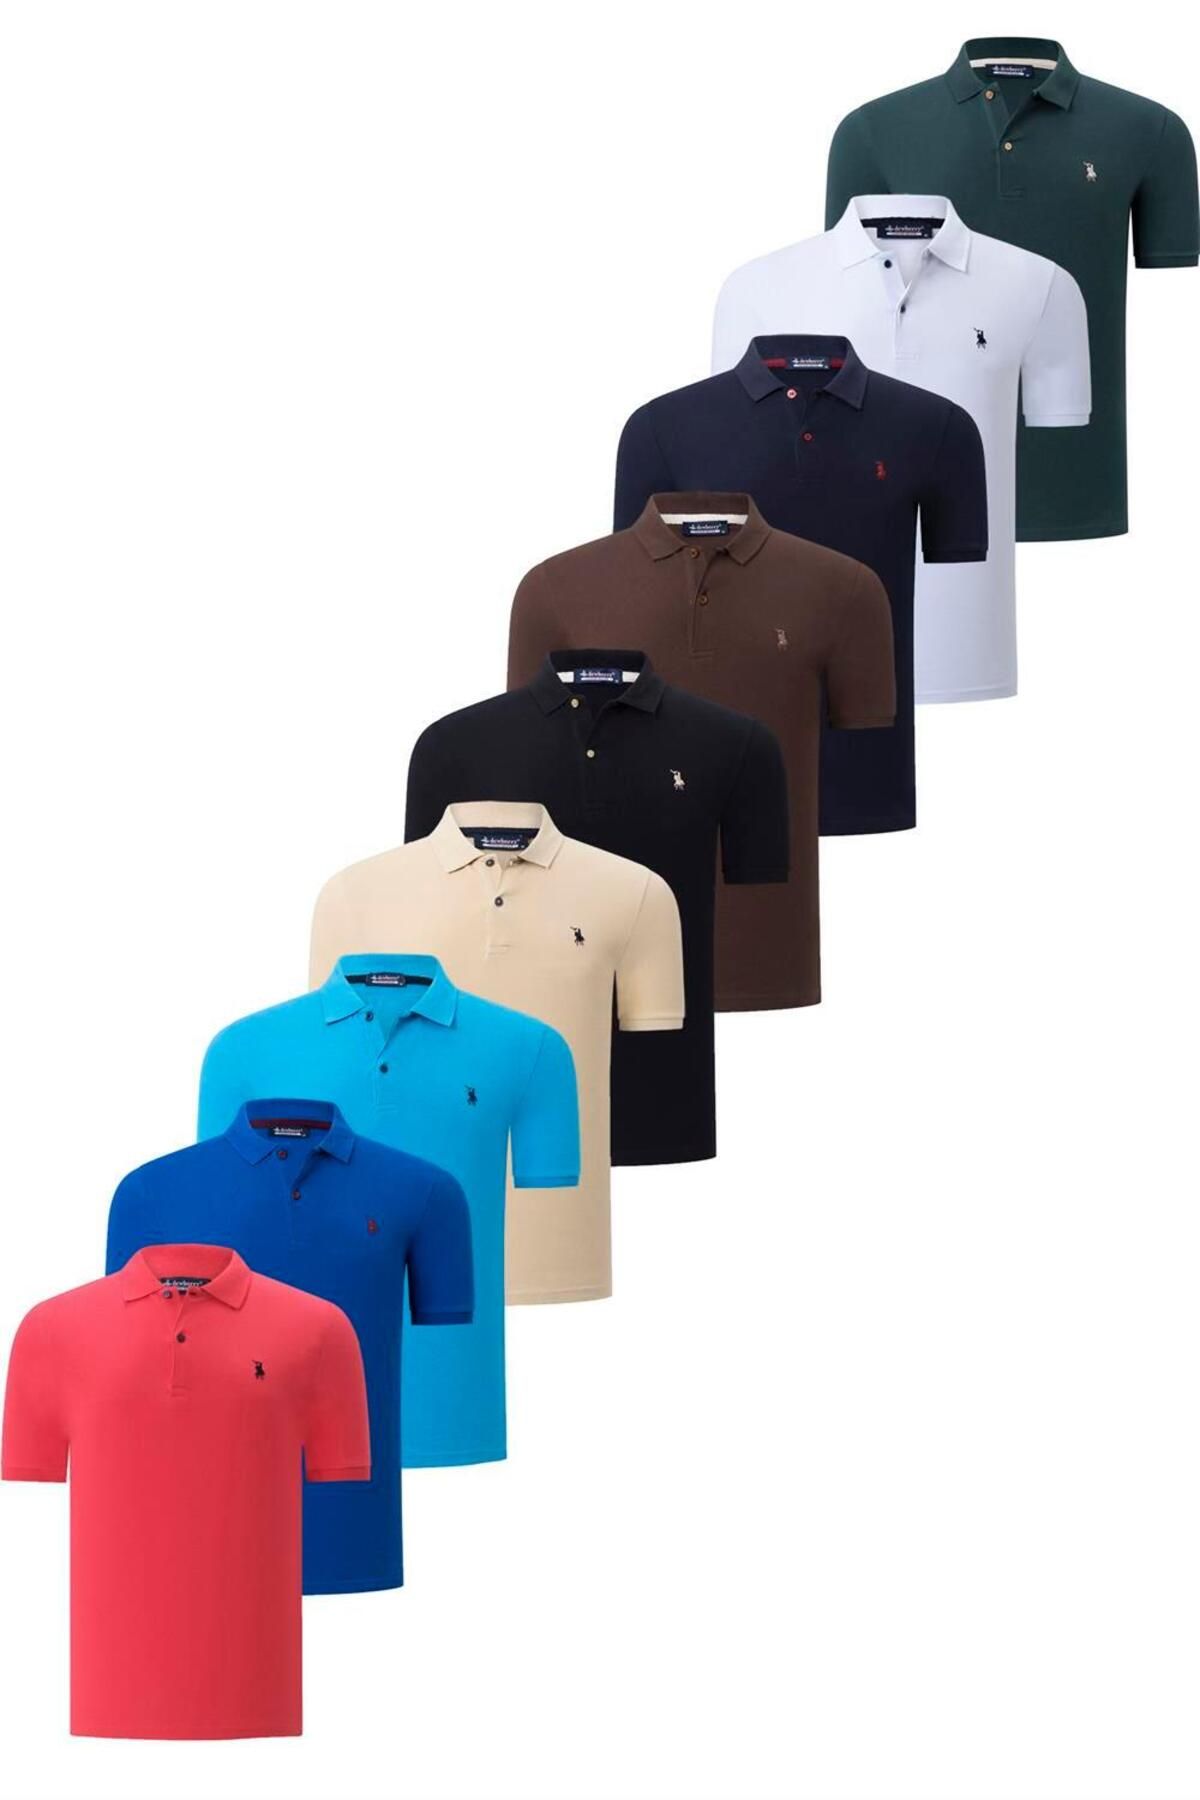 Dewberry ست تی شرت مردانه 9 T8561 Dewberry-مشکی-سفید-آبی تیره-آبی-قهوه ای-بژ-اناری-ساکس-خاکی